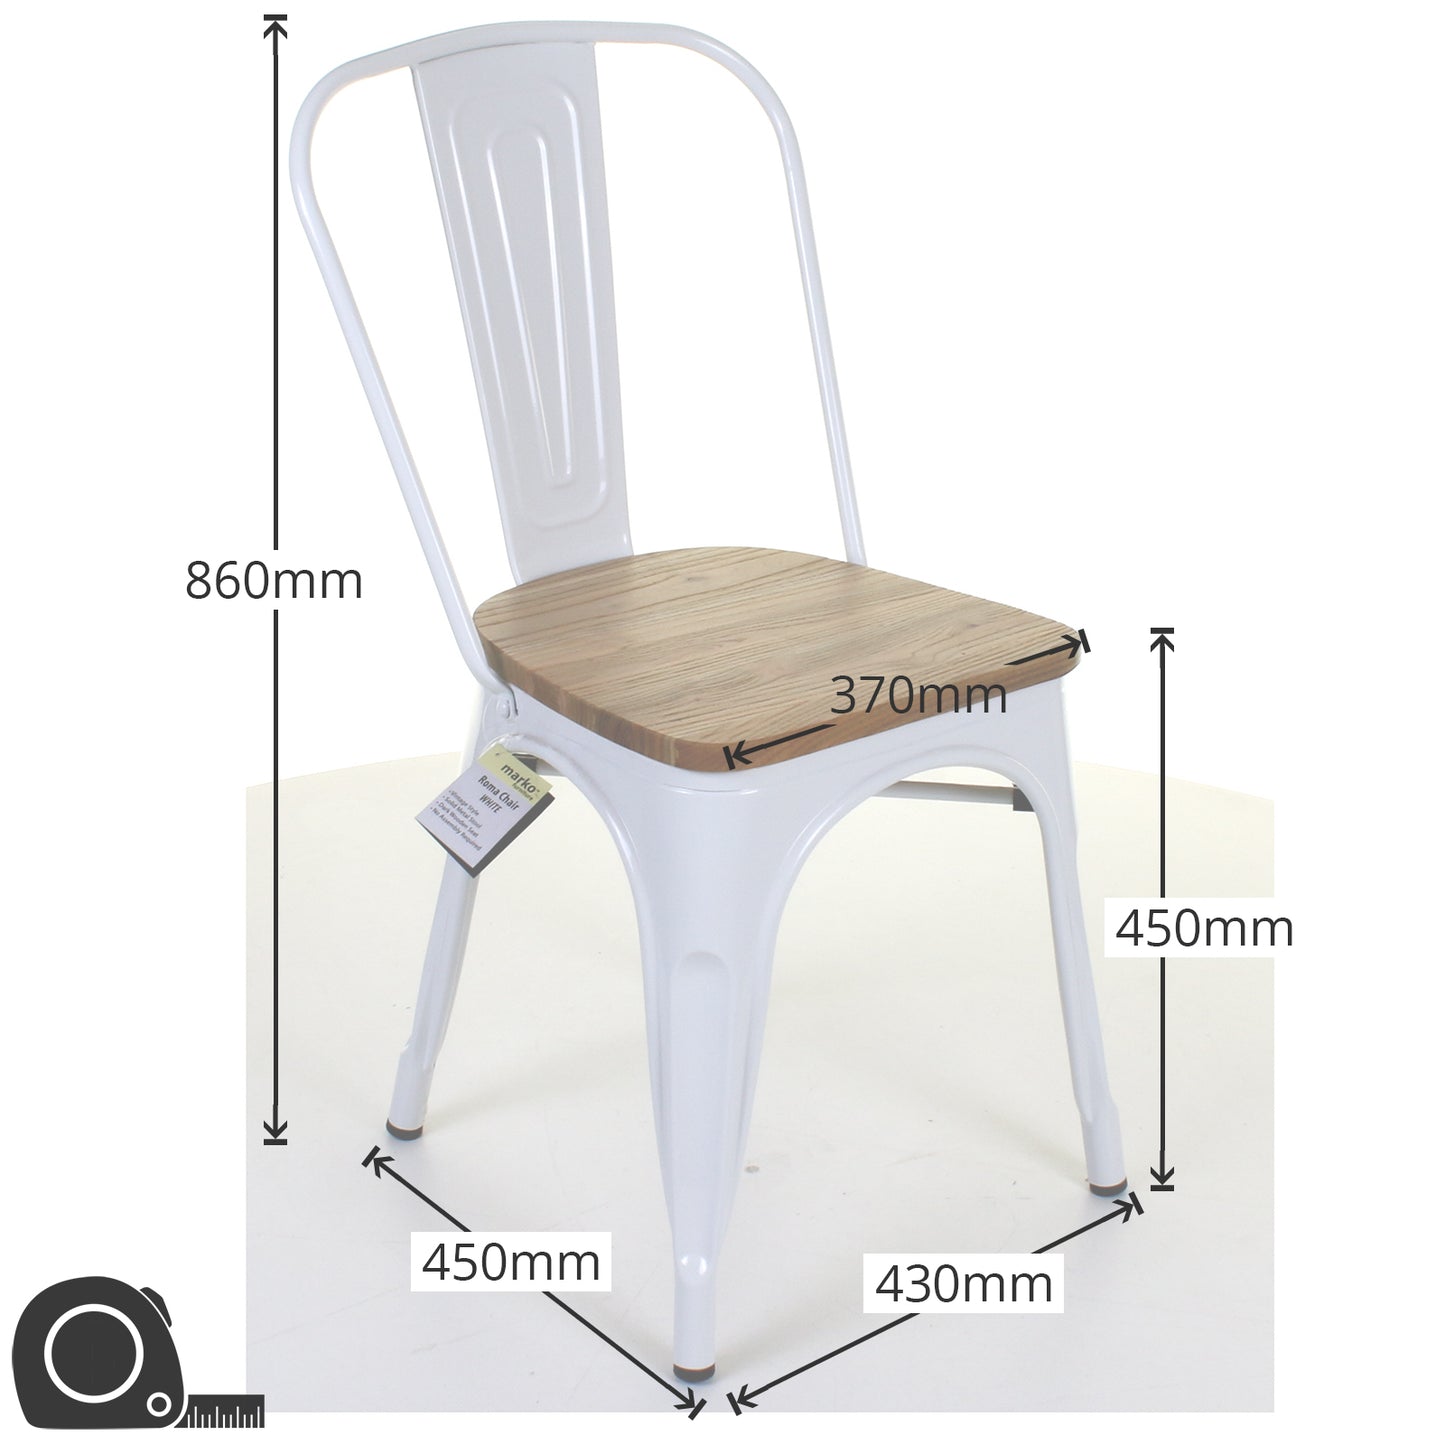 6PC Prato Table, 4 Palermo Chairs & Sicily Bench Set - White